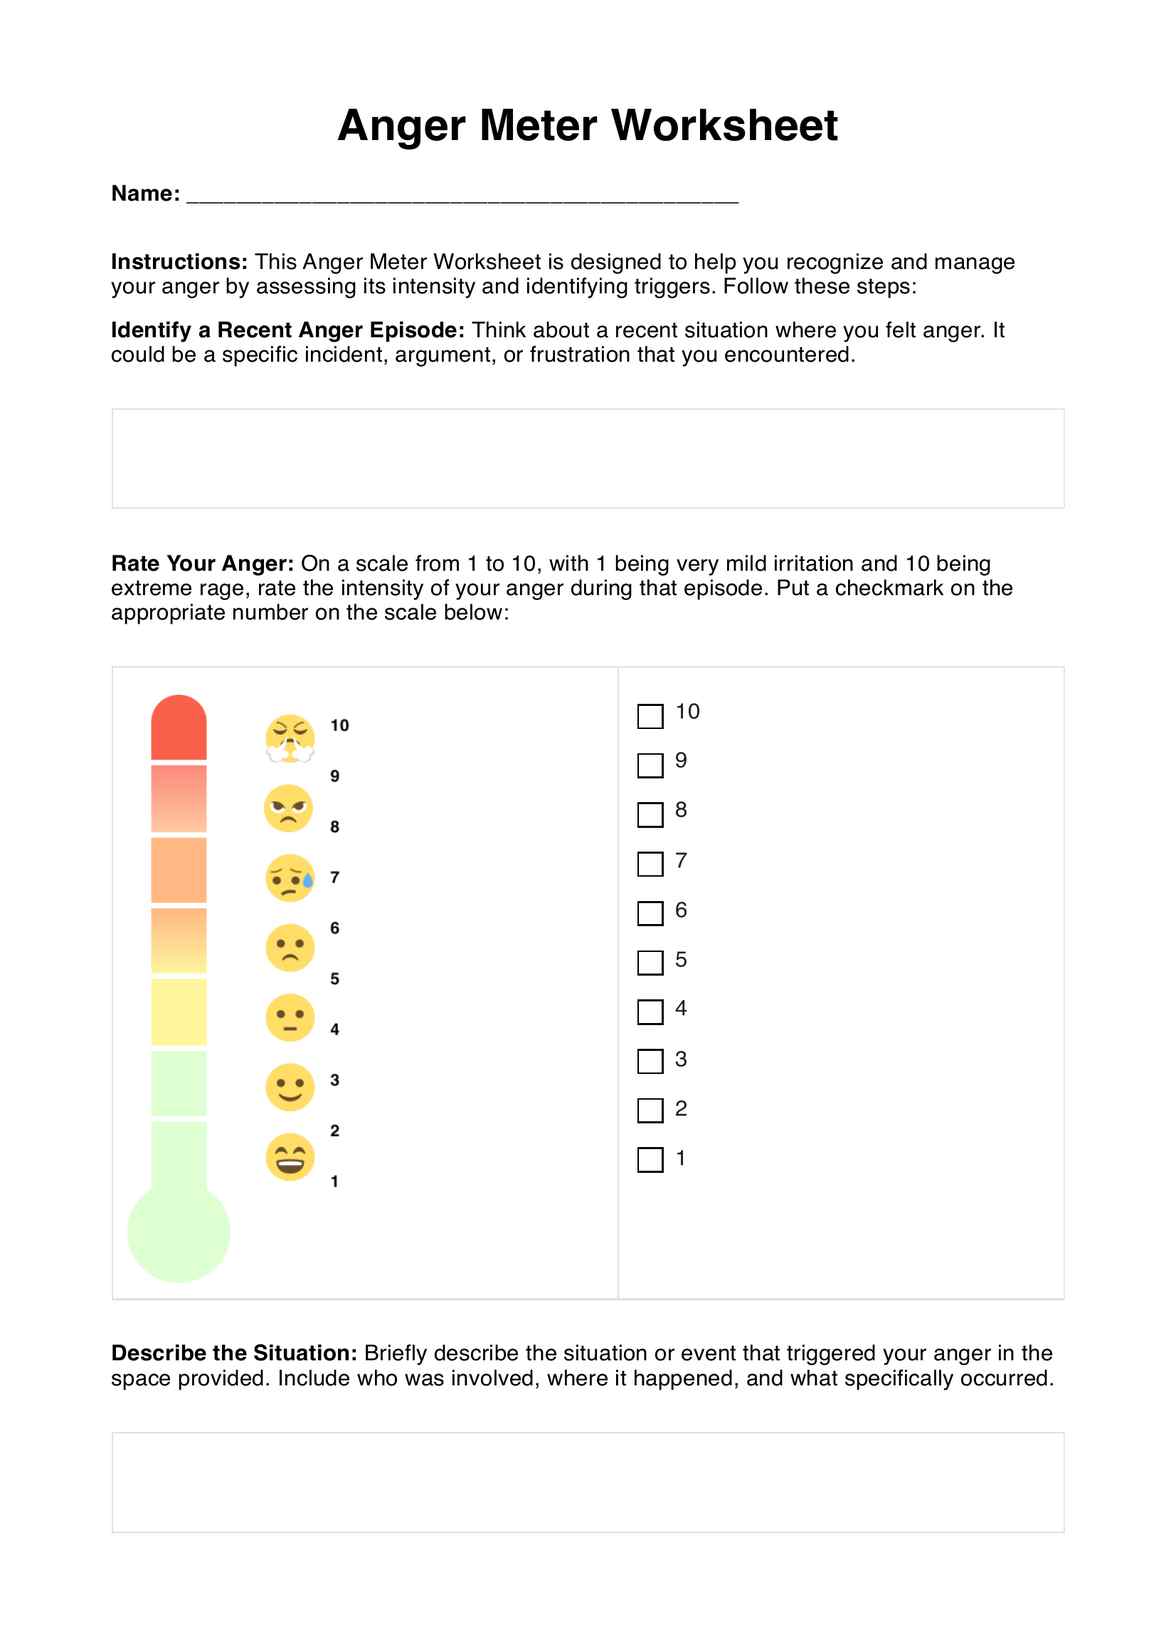 Anger Meter Worksheet PDF Example